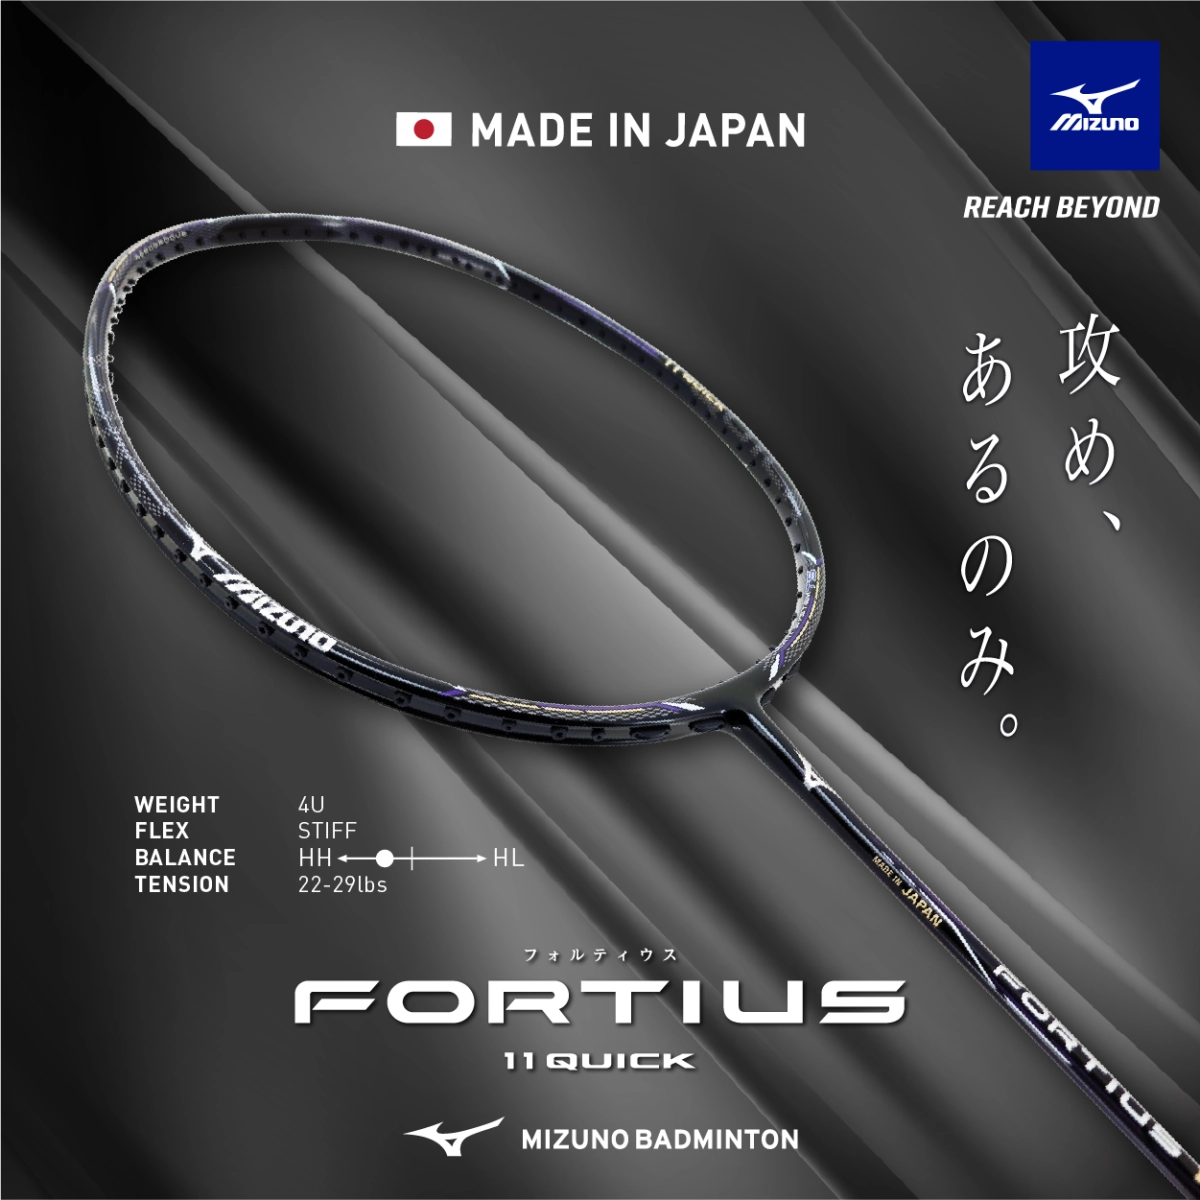 vợt cầu lông mizuno cao cấp fotius 11 quick